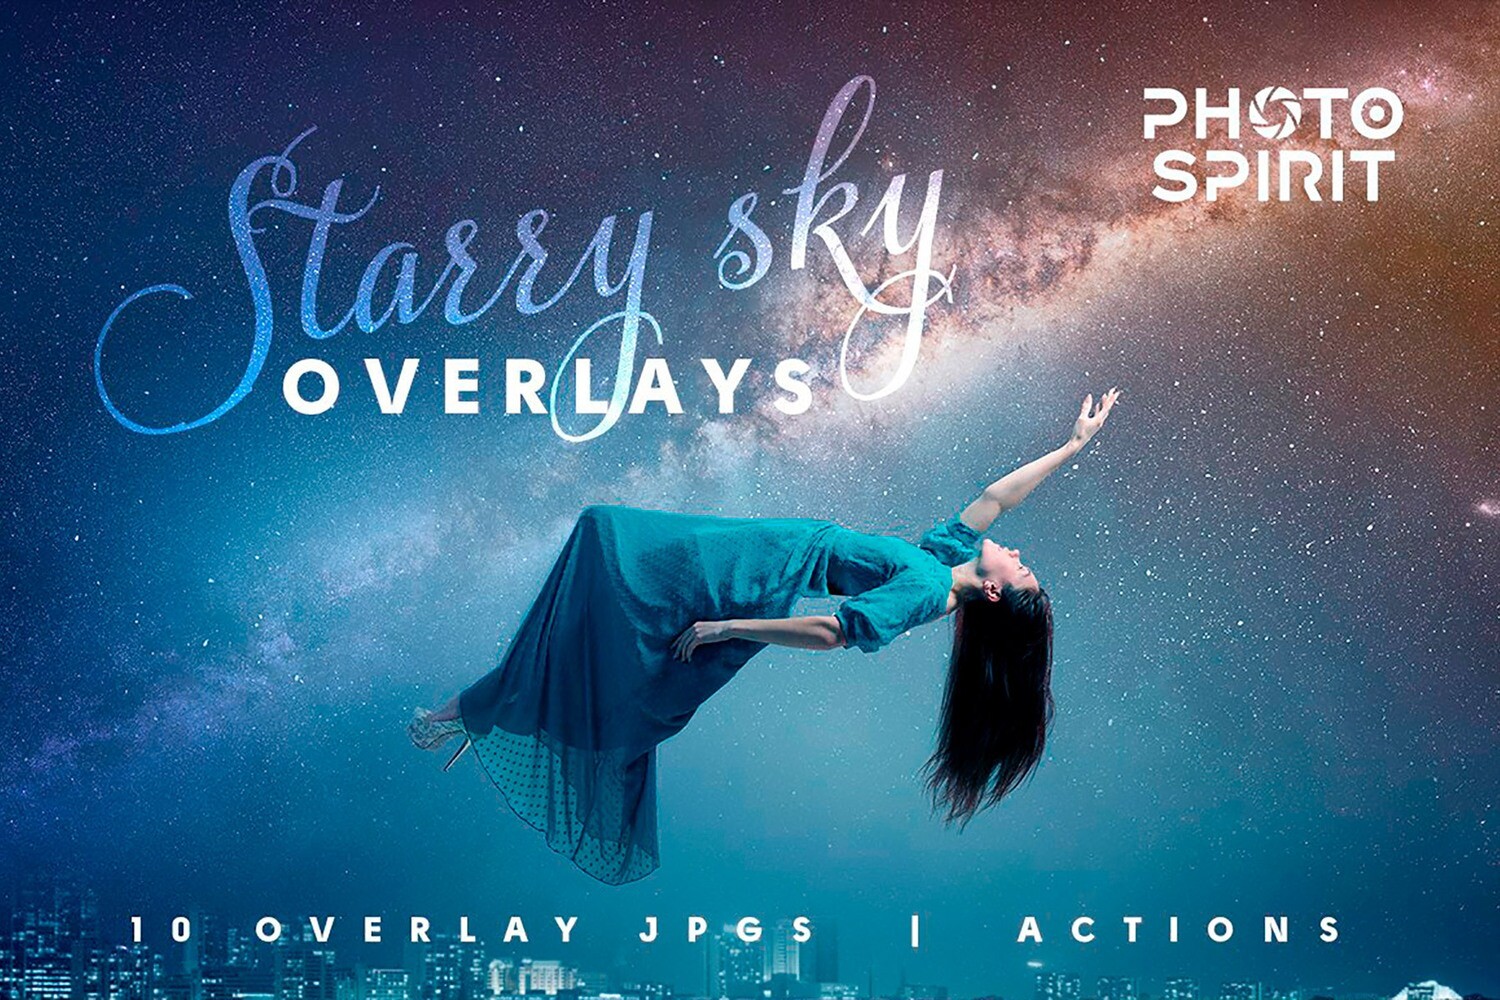 Night Sky Starry Overlays + Actions